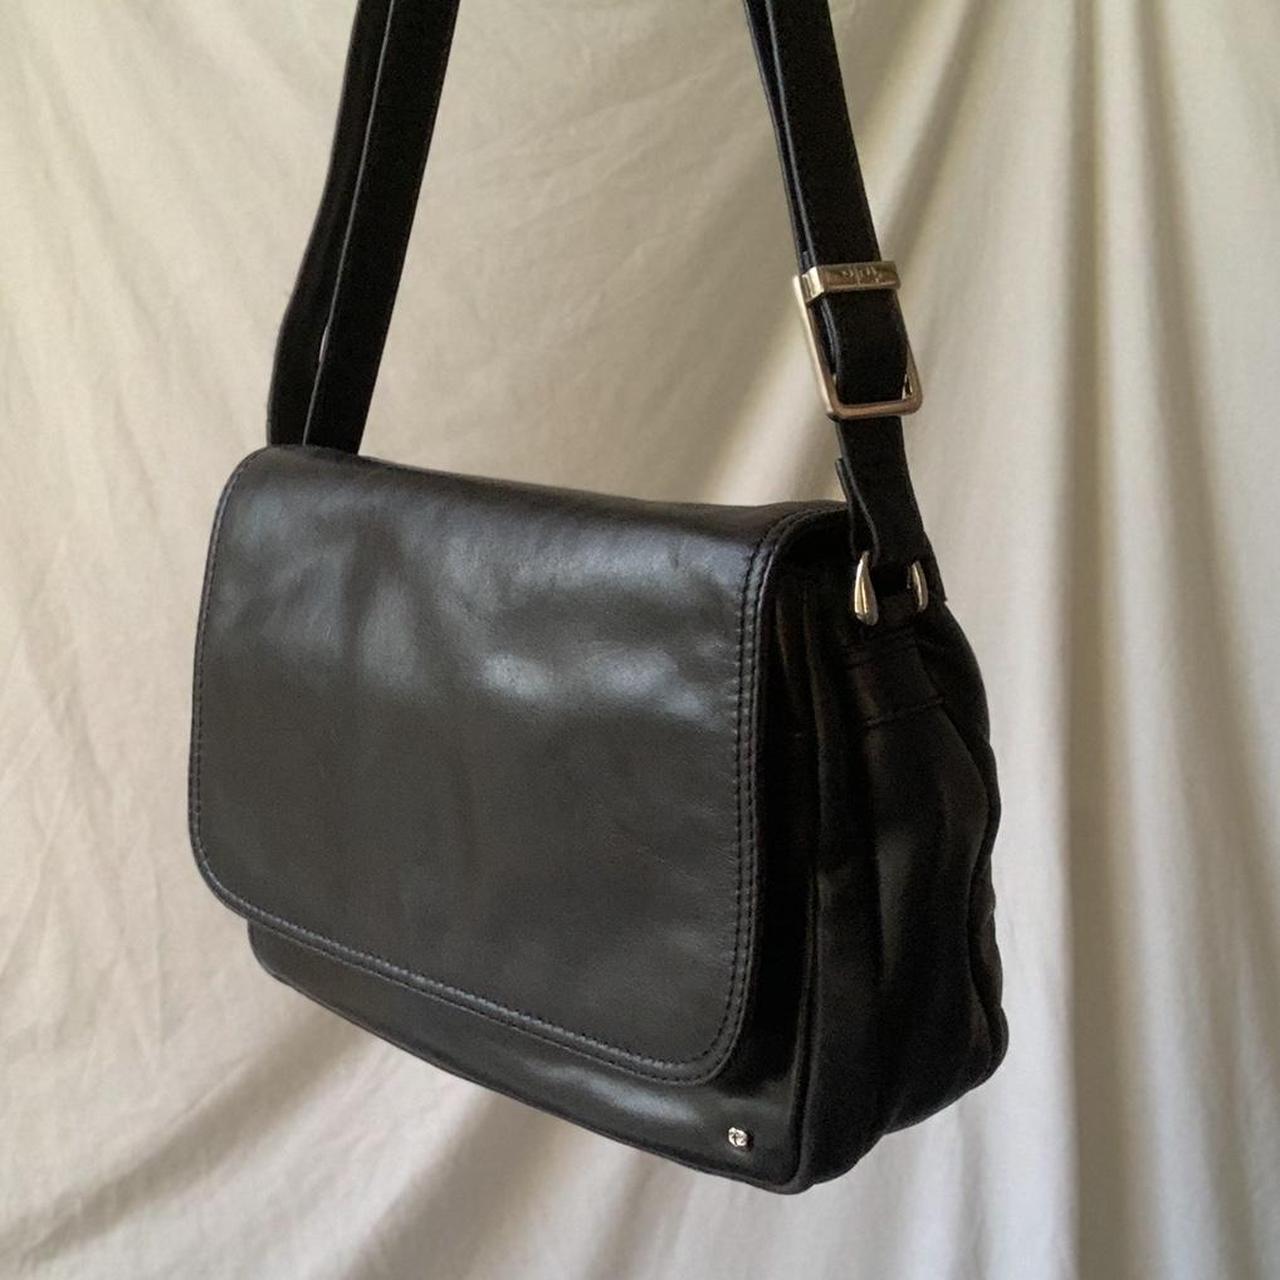 Vintage 90s black boxy leather crossbody bag. Silver... - Depop